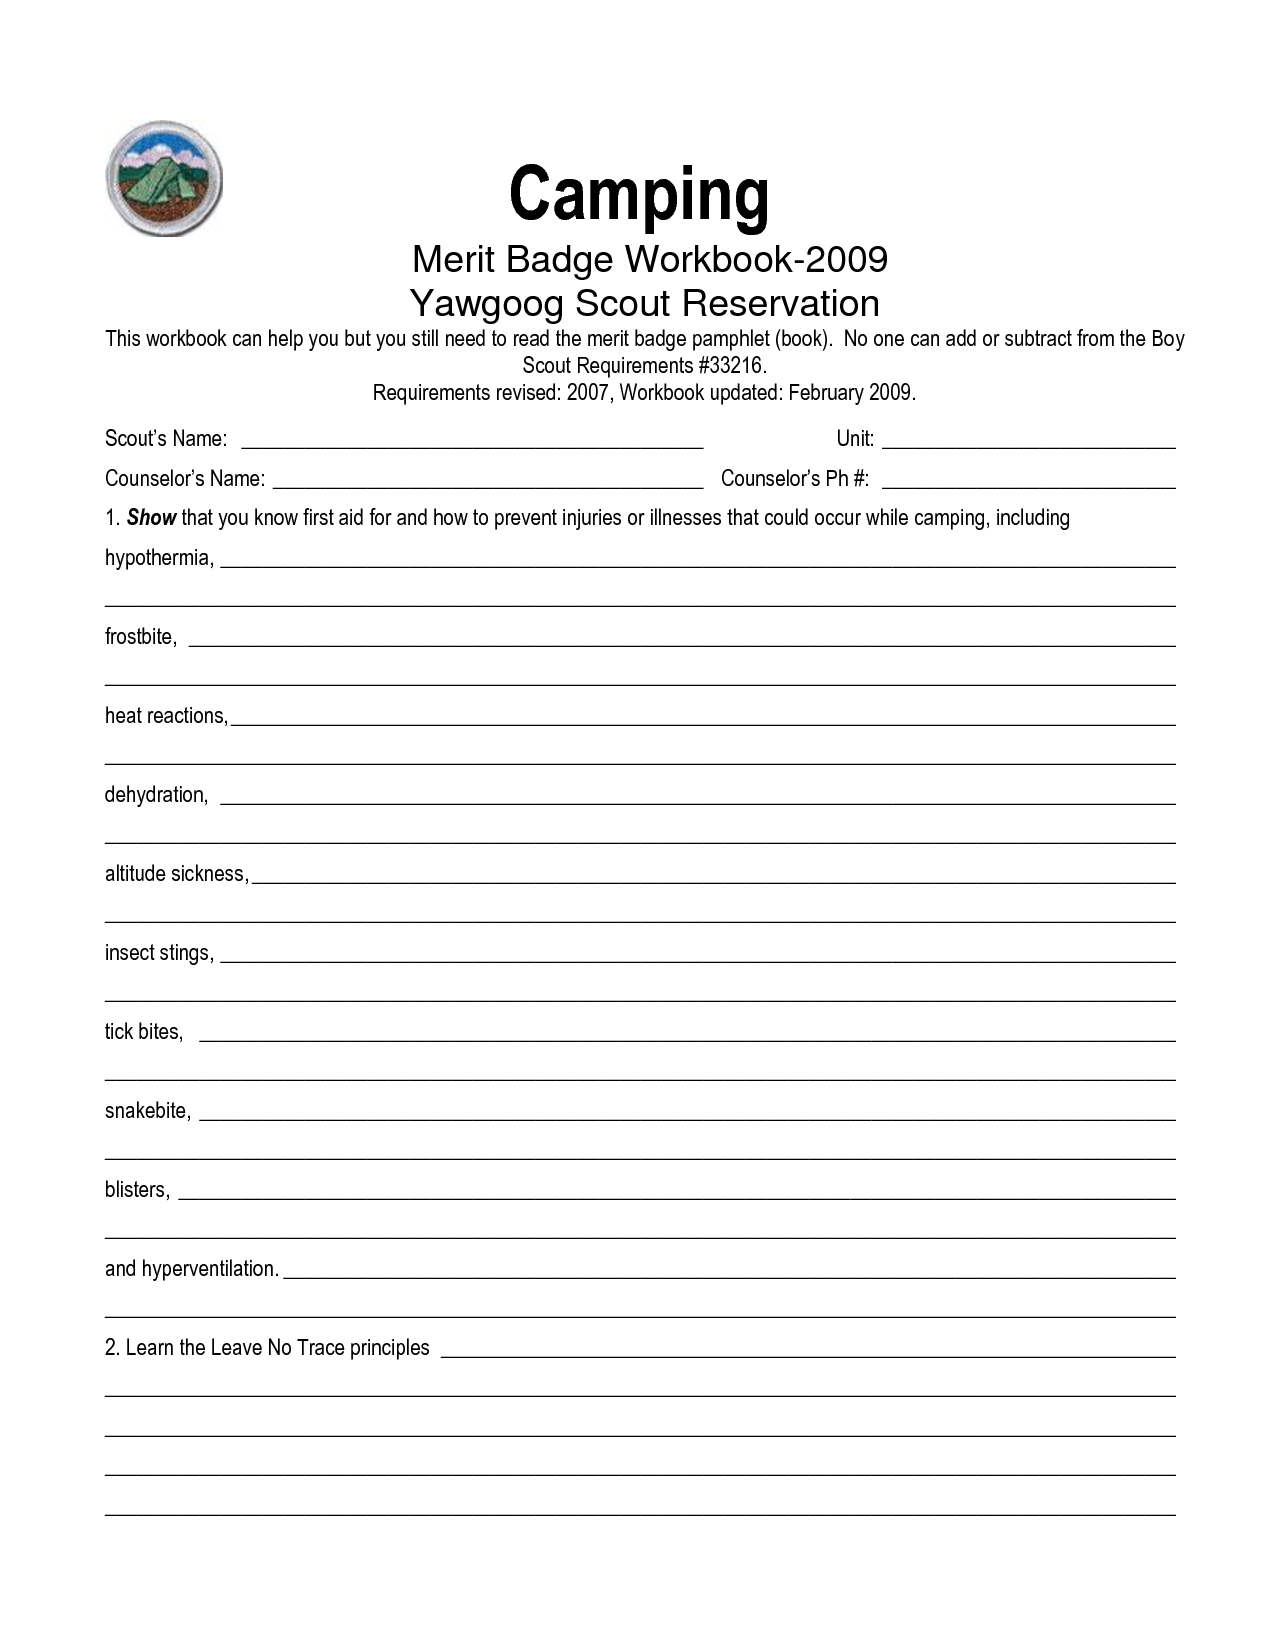 Camping Merit Badge Worksheet Answers